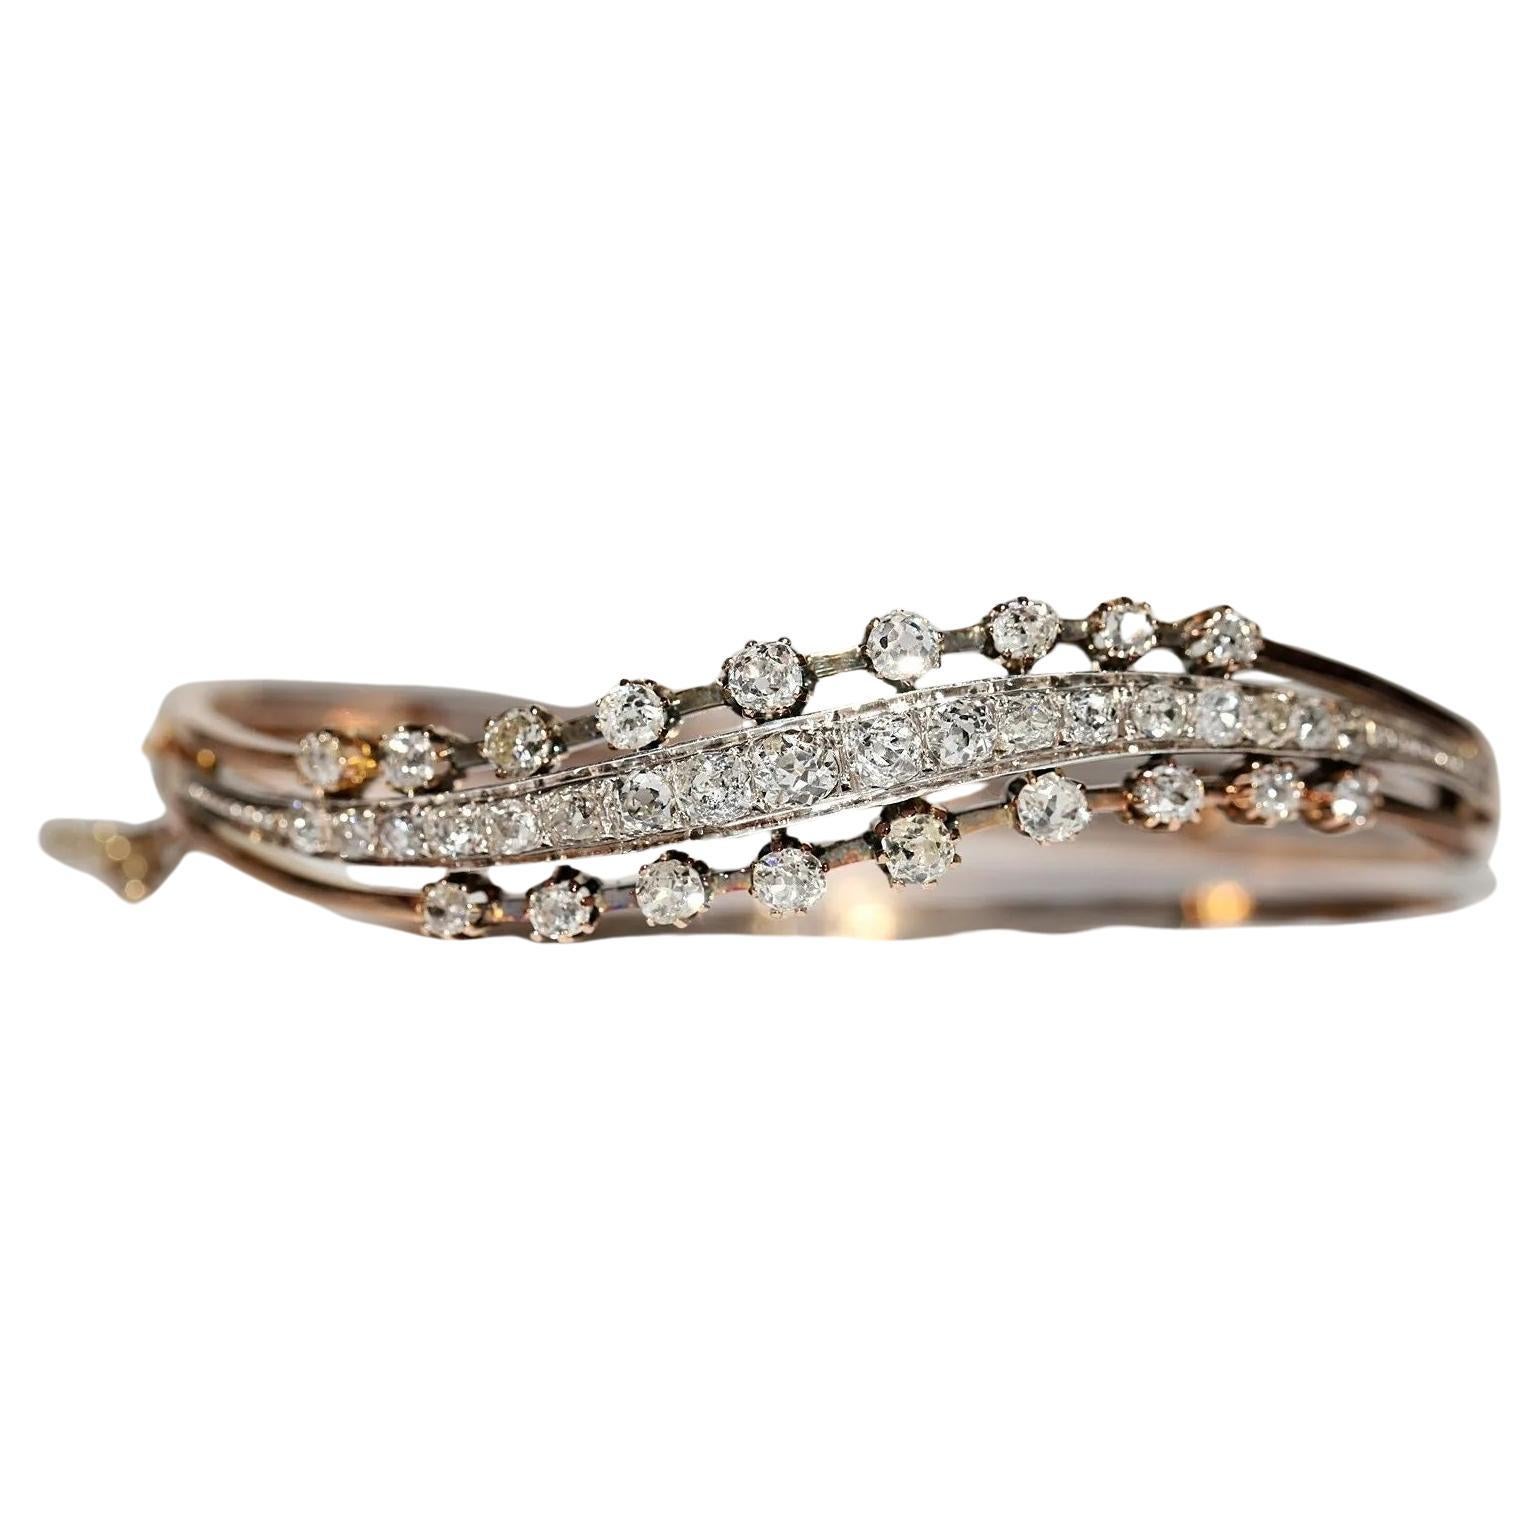 Antique Circa 1900s 18k Gold Natural Diamond Decorated Bangle Bracelet 